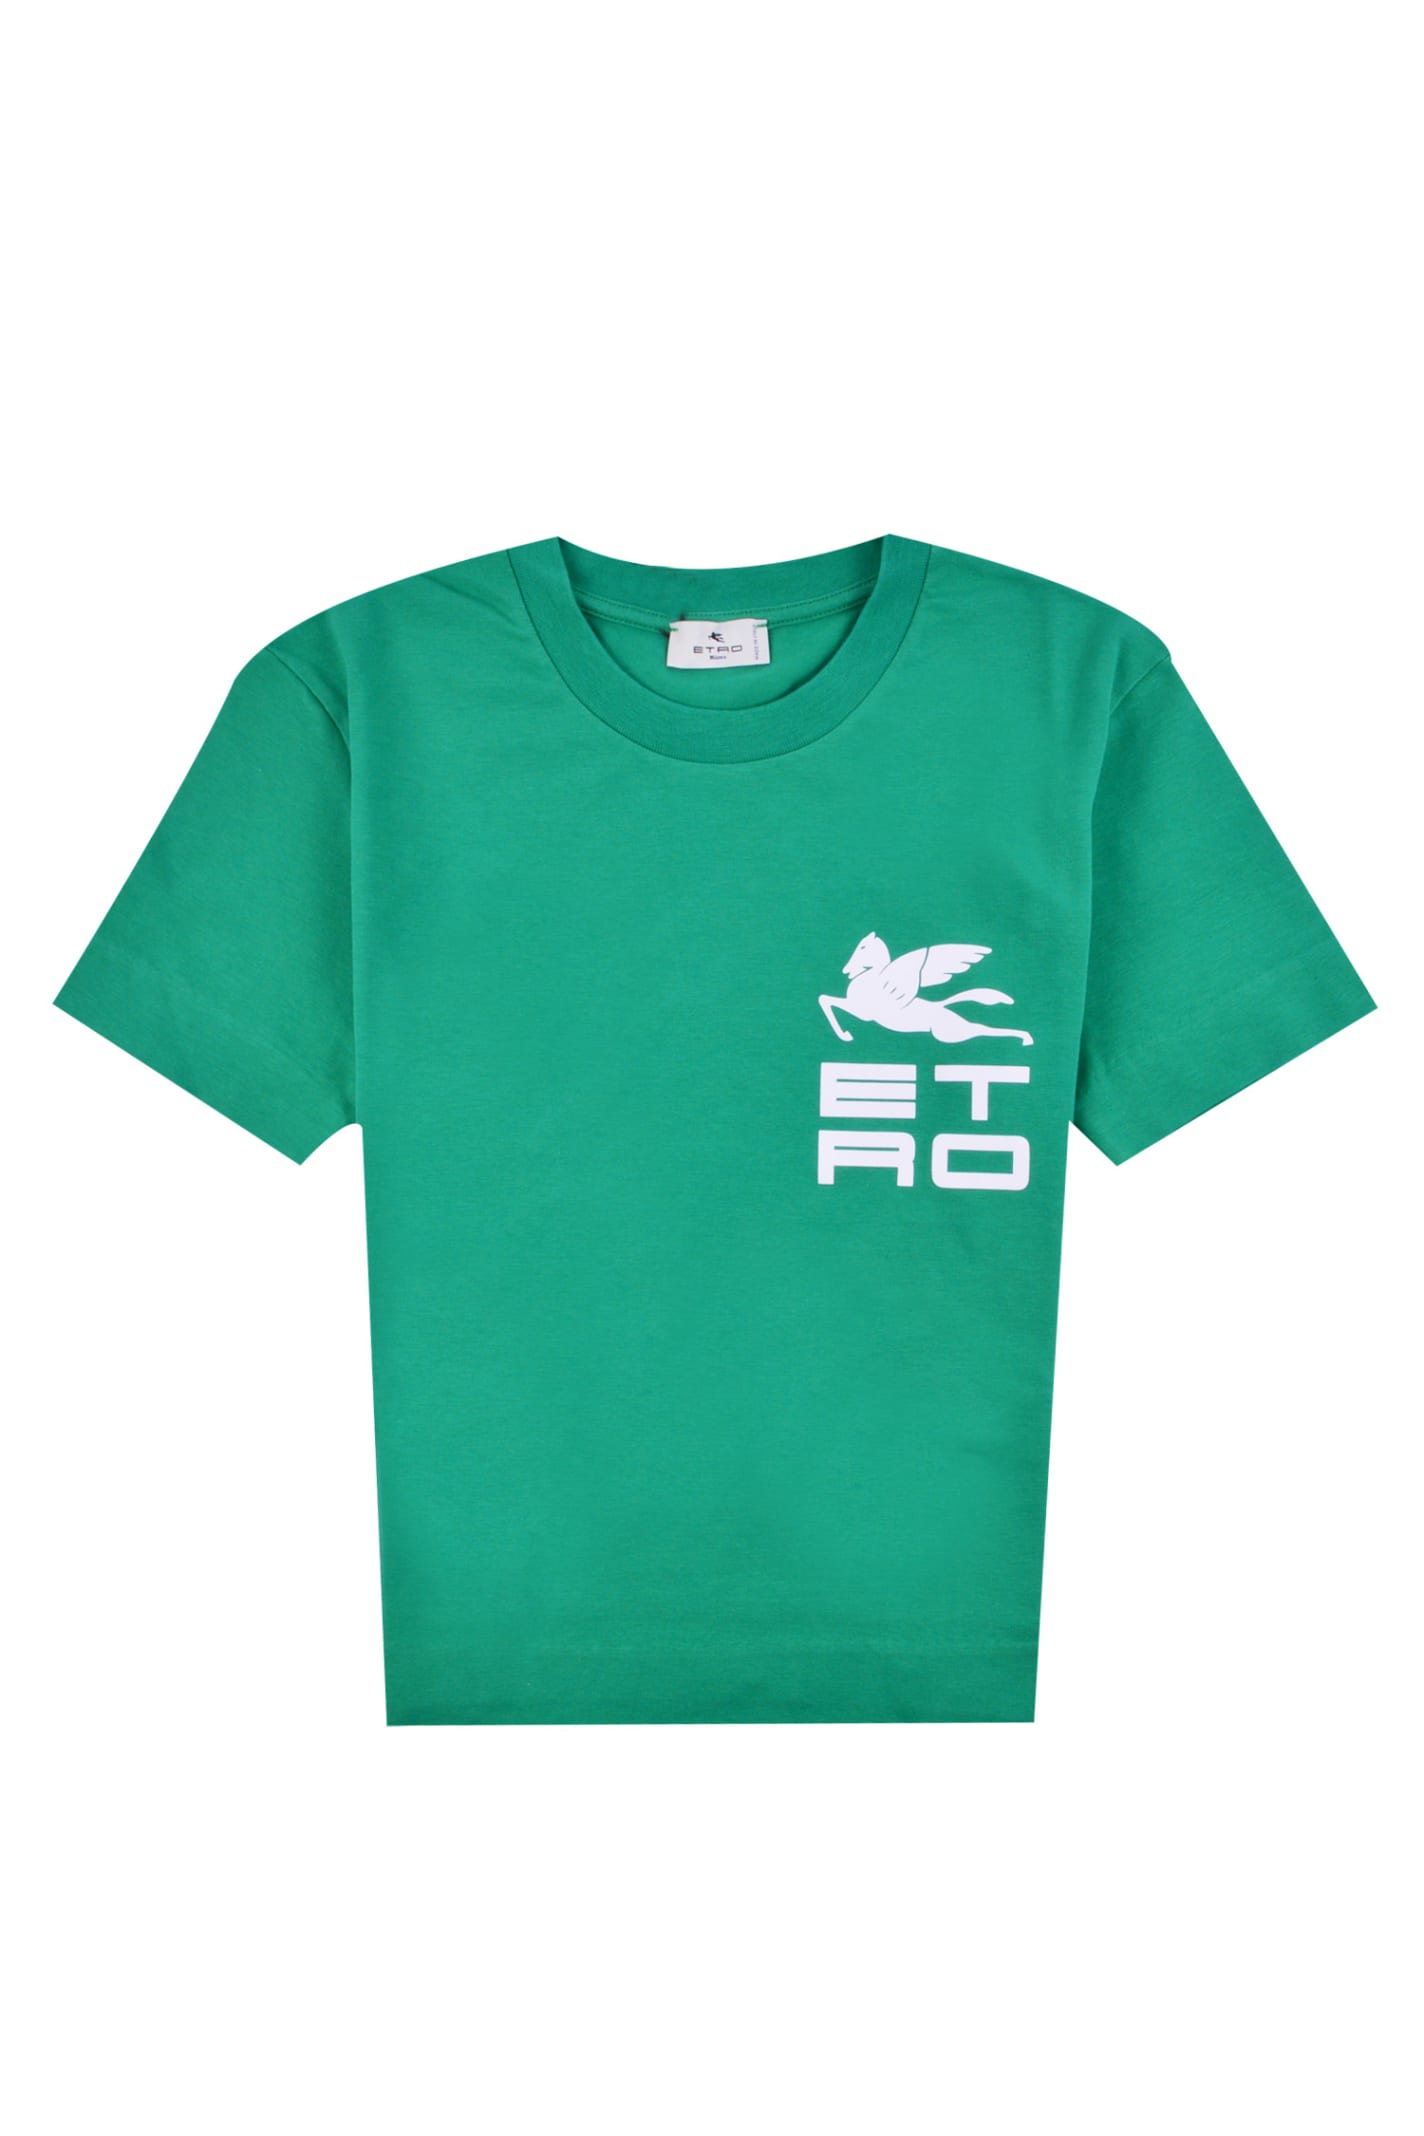 Etro Cotton T-shirt